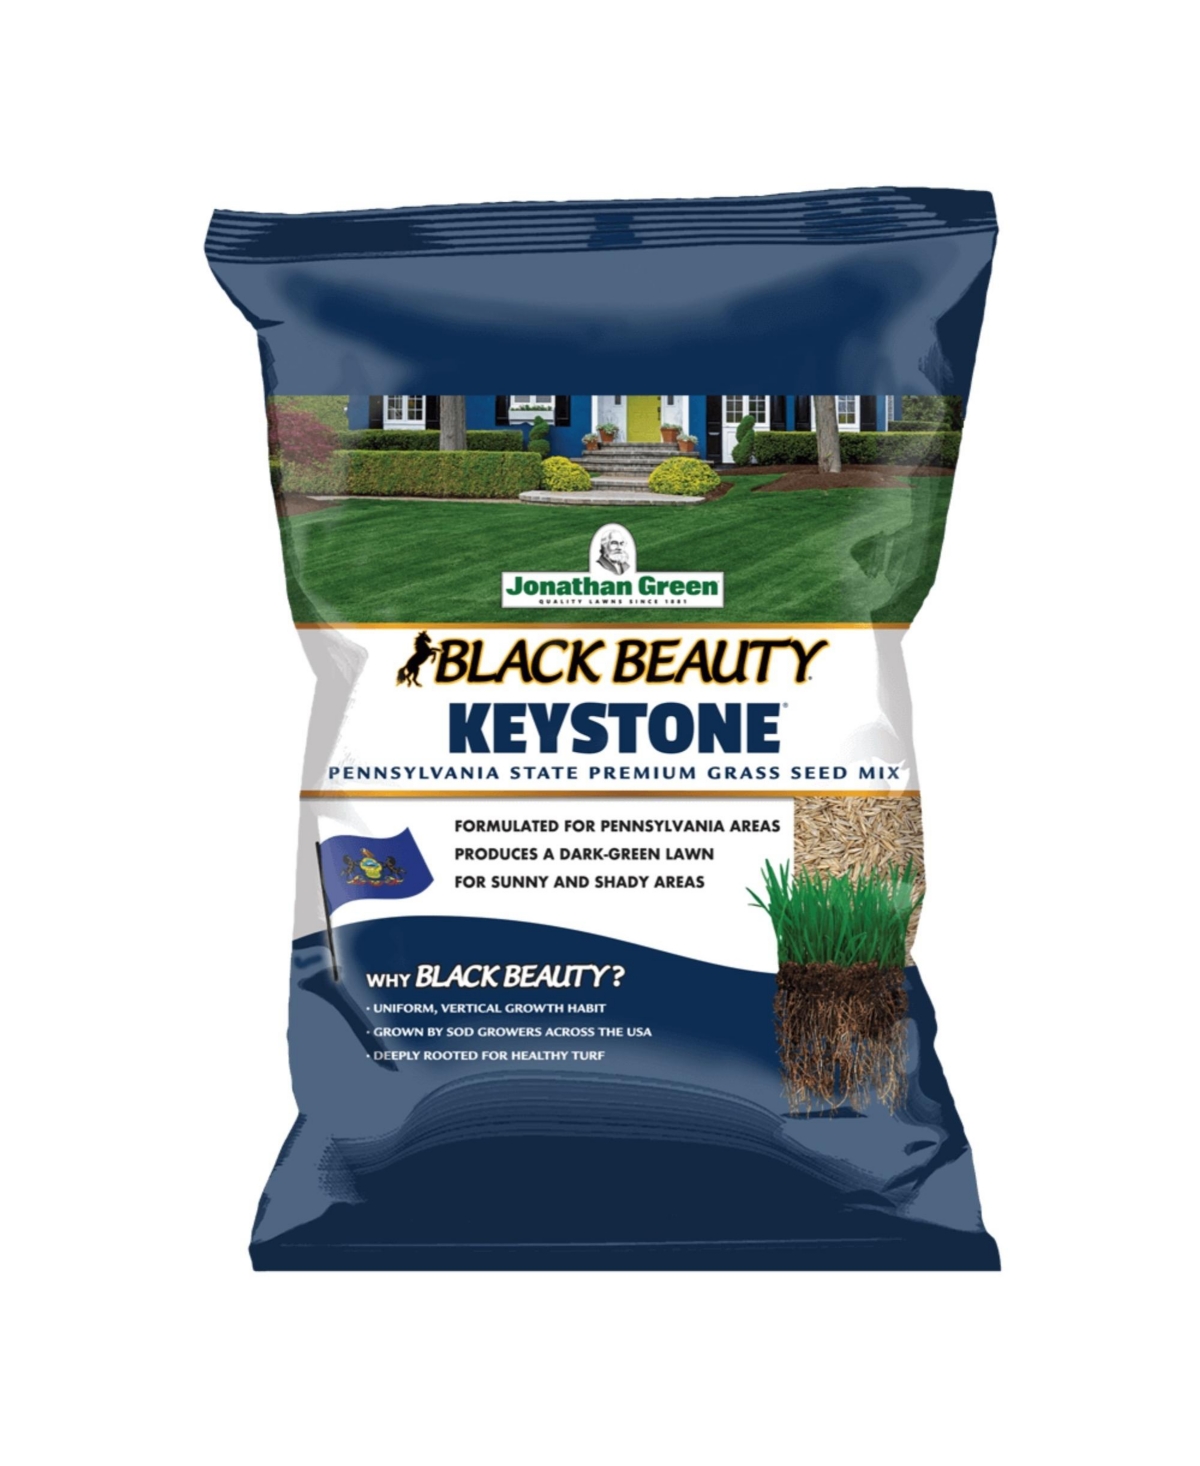 Black Beauty Keystone Pennsylvania Grass Seed Mix, 3lb - Brown